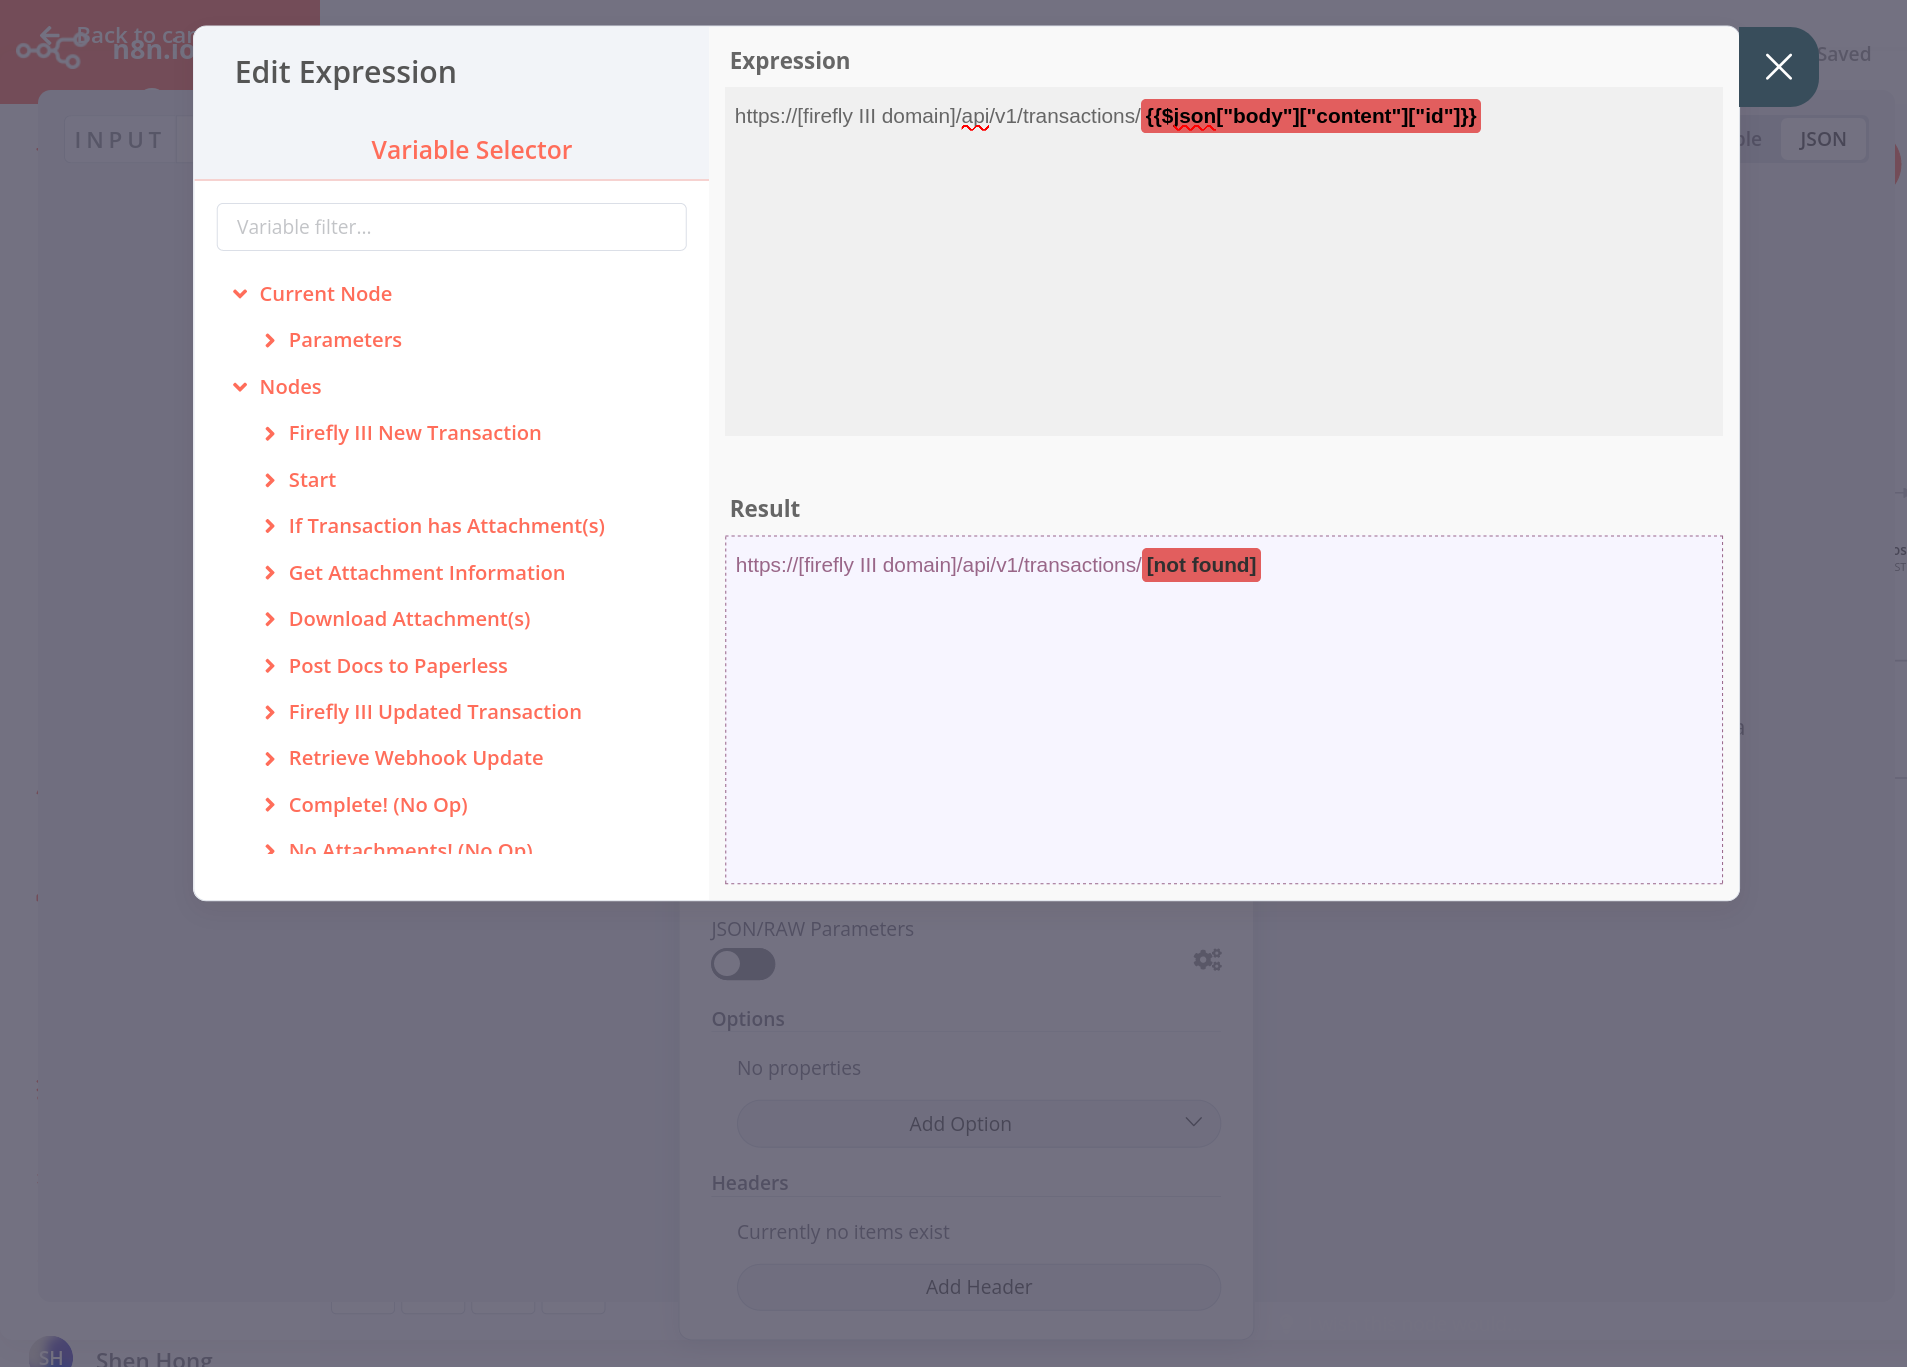 Screenshot of the n8n expression editor